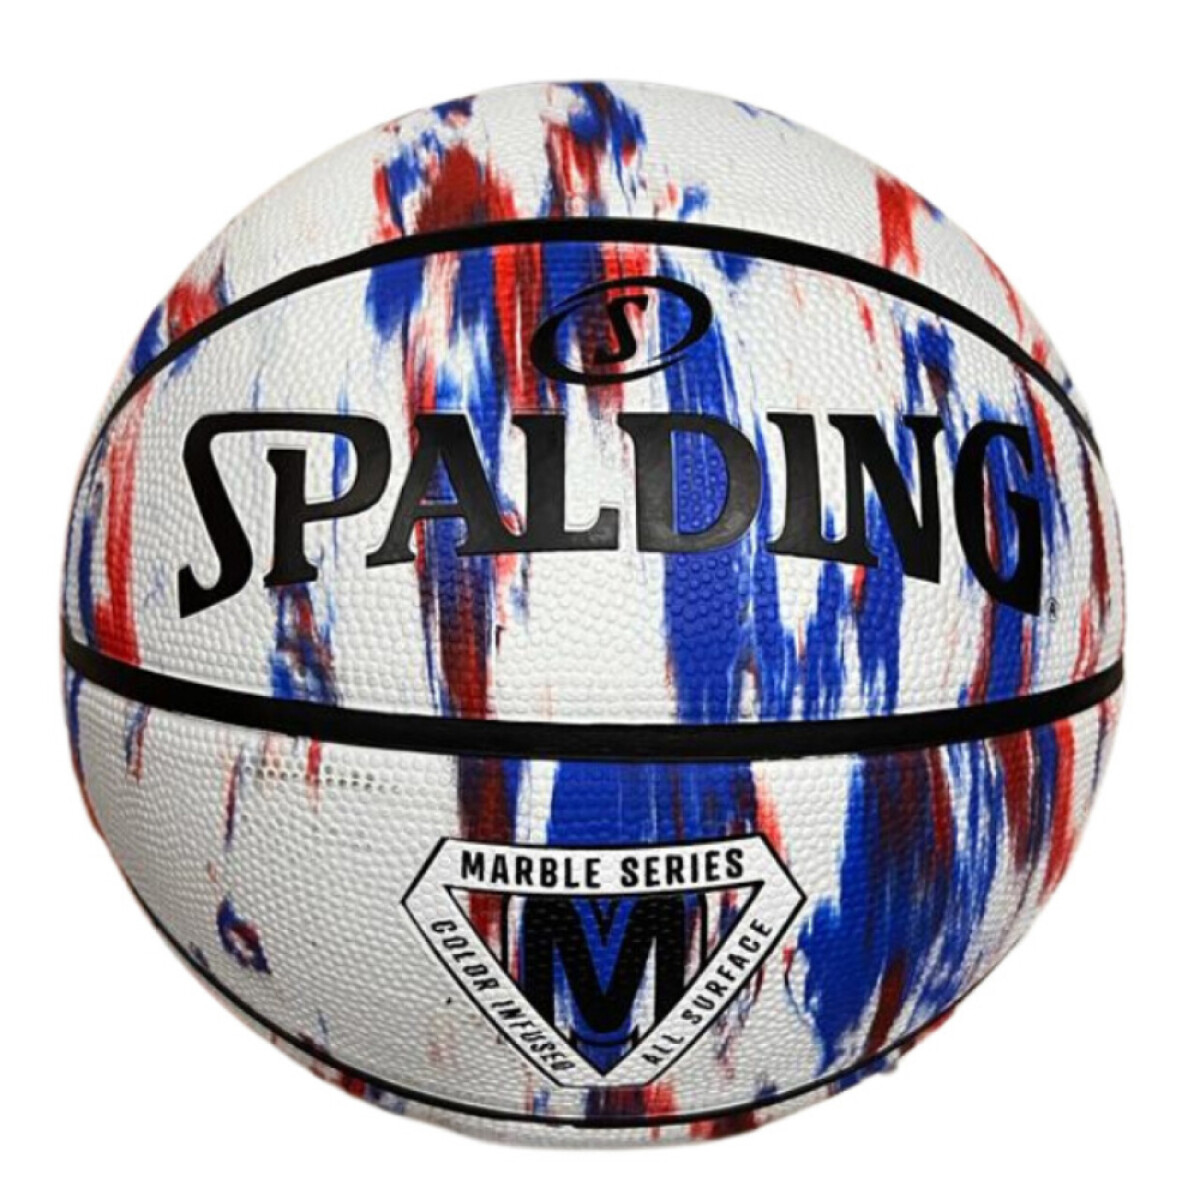 Pelota Basket Spalding Profesional - Marble Blanca Nº7 